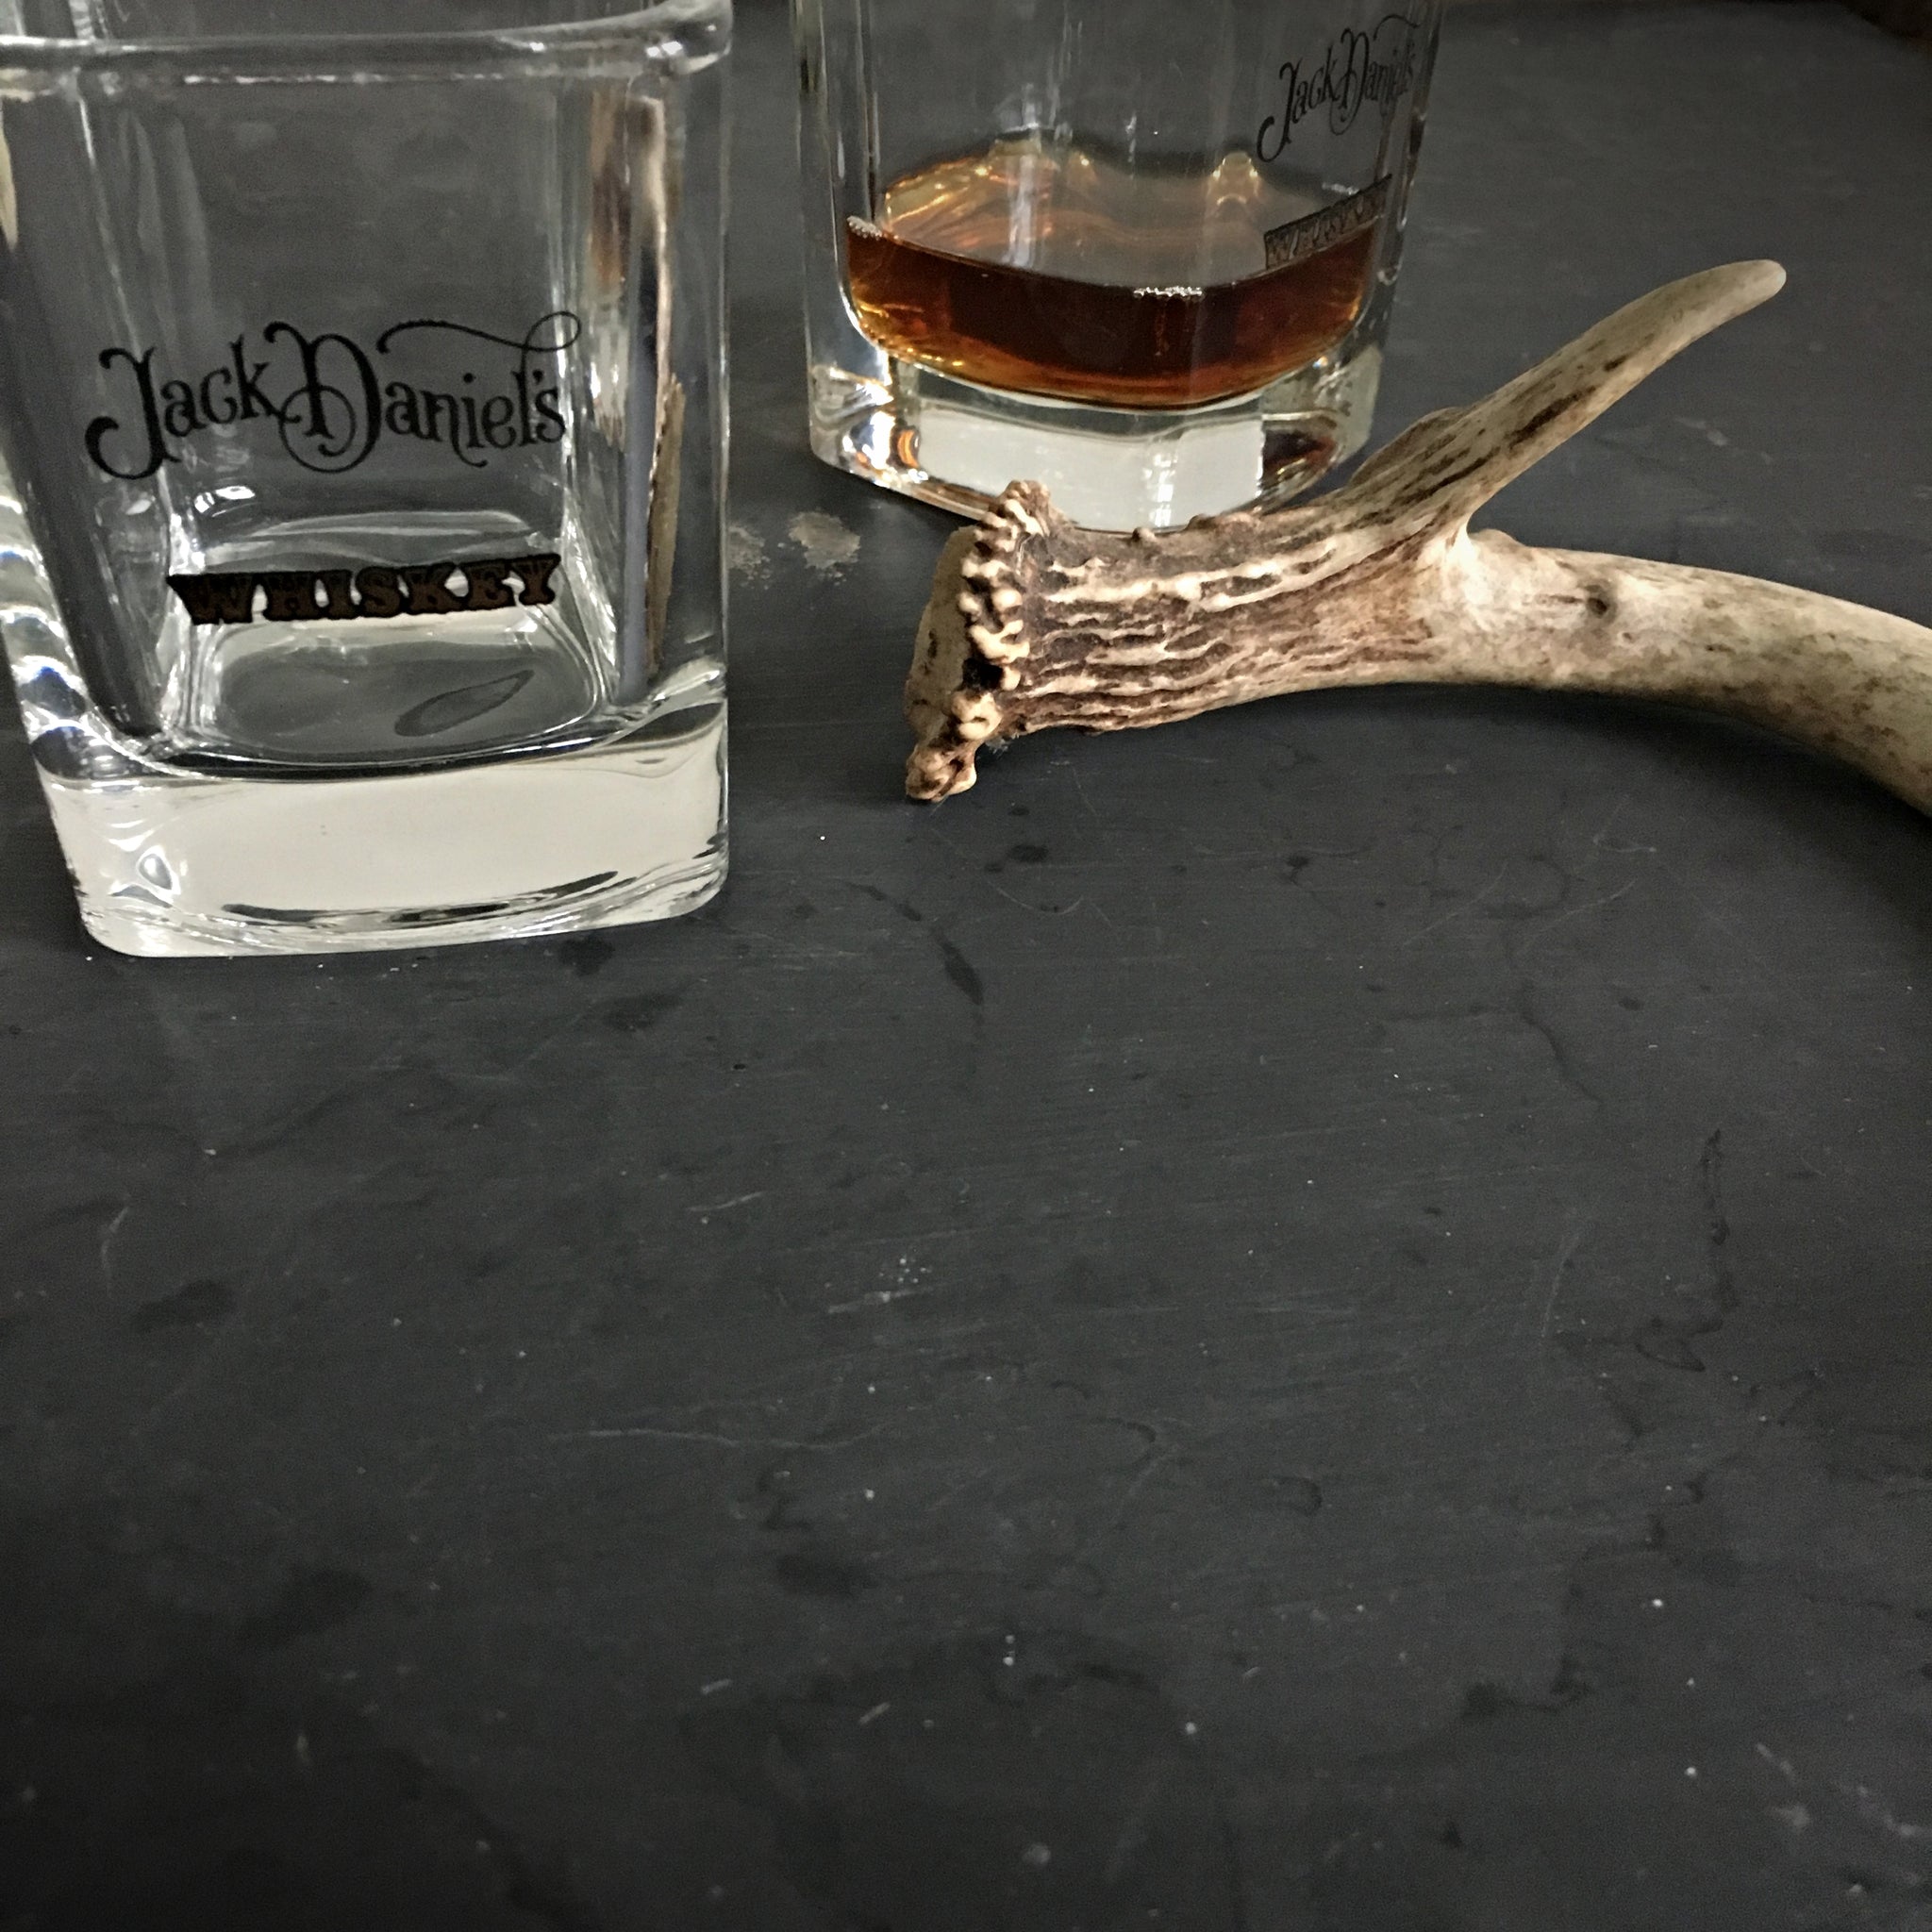 Vintage Jack Daniel's Whiskey Tumbler Glasses- Pair of 2 - Square Rocks Glasses